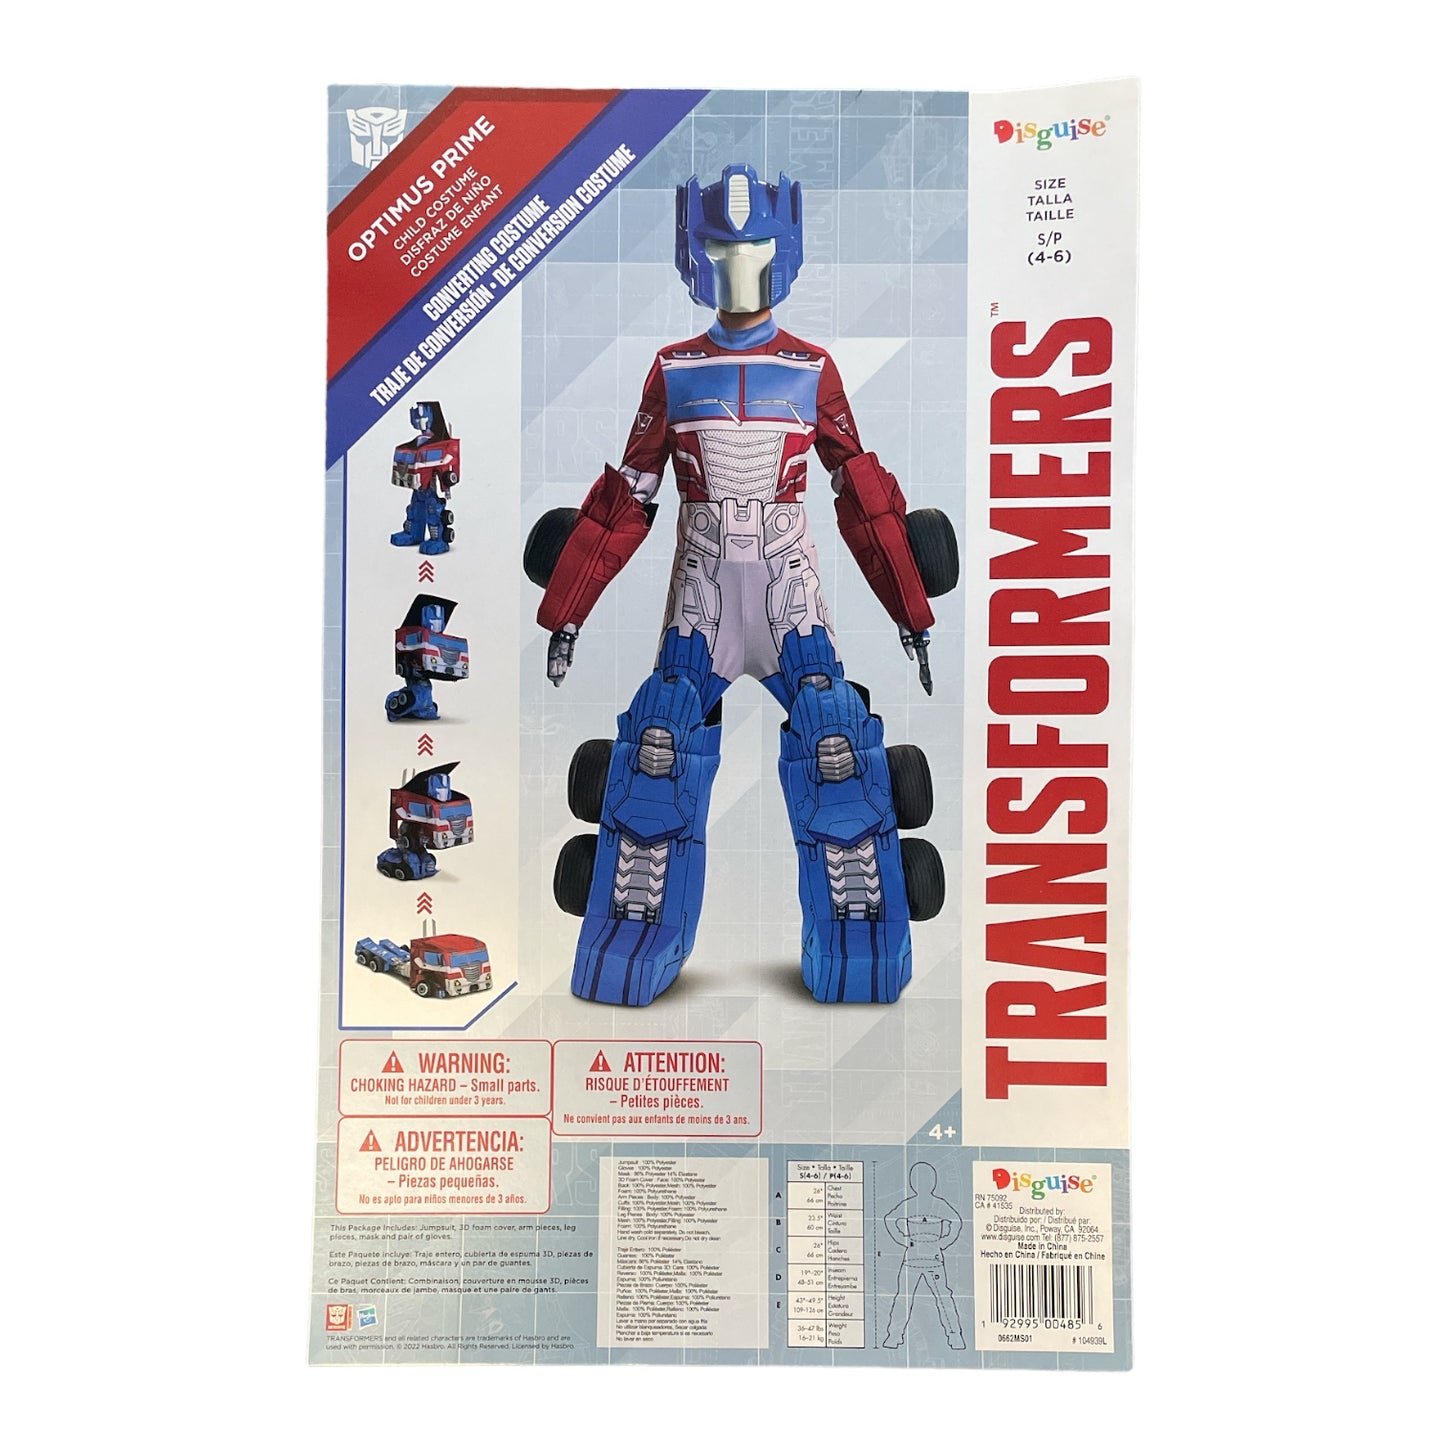 Disguise Transformers Optimus Prime Converting Child Costume, S (4-6)